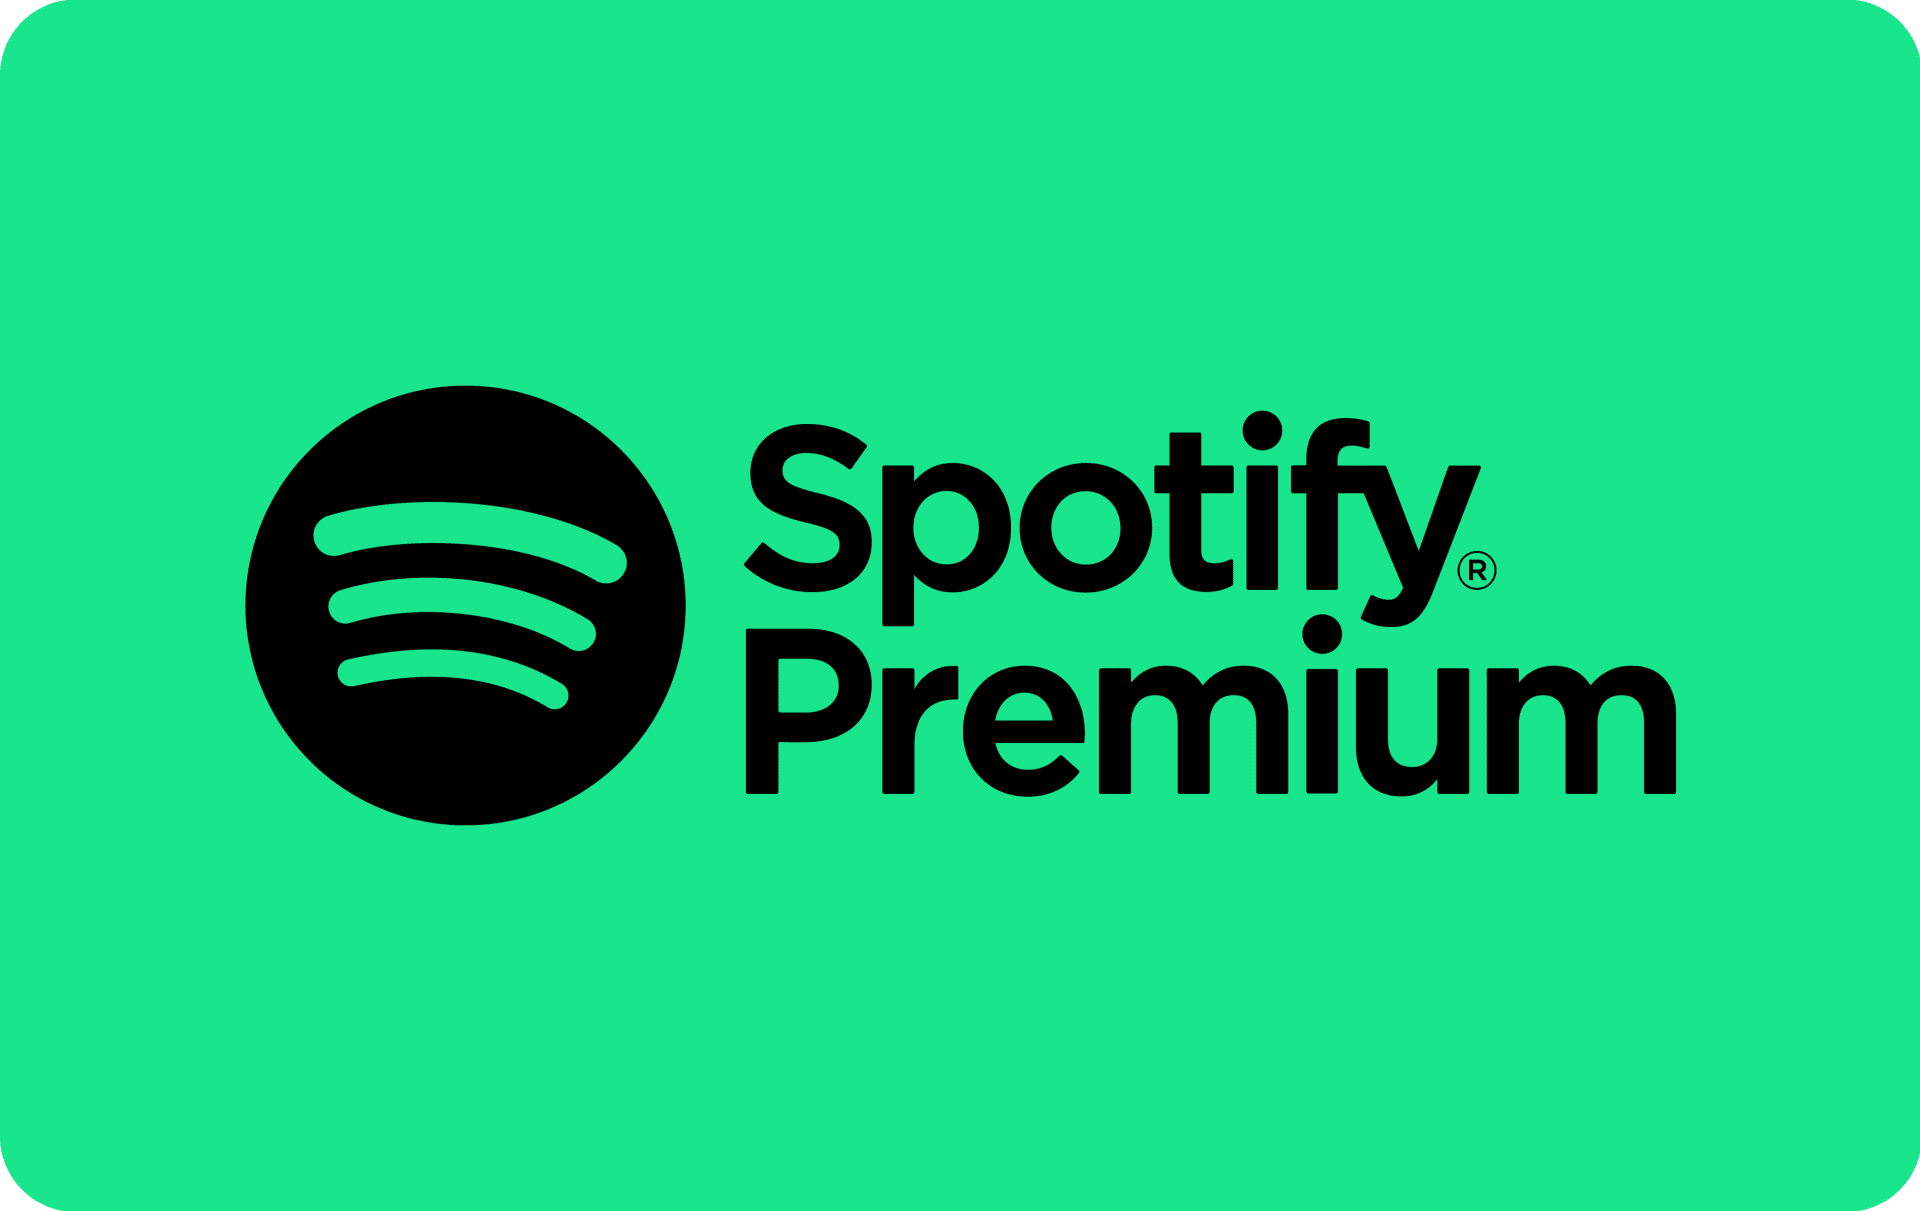 Spotify Free vs Premium: Is it worth it? - SoundGuys